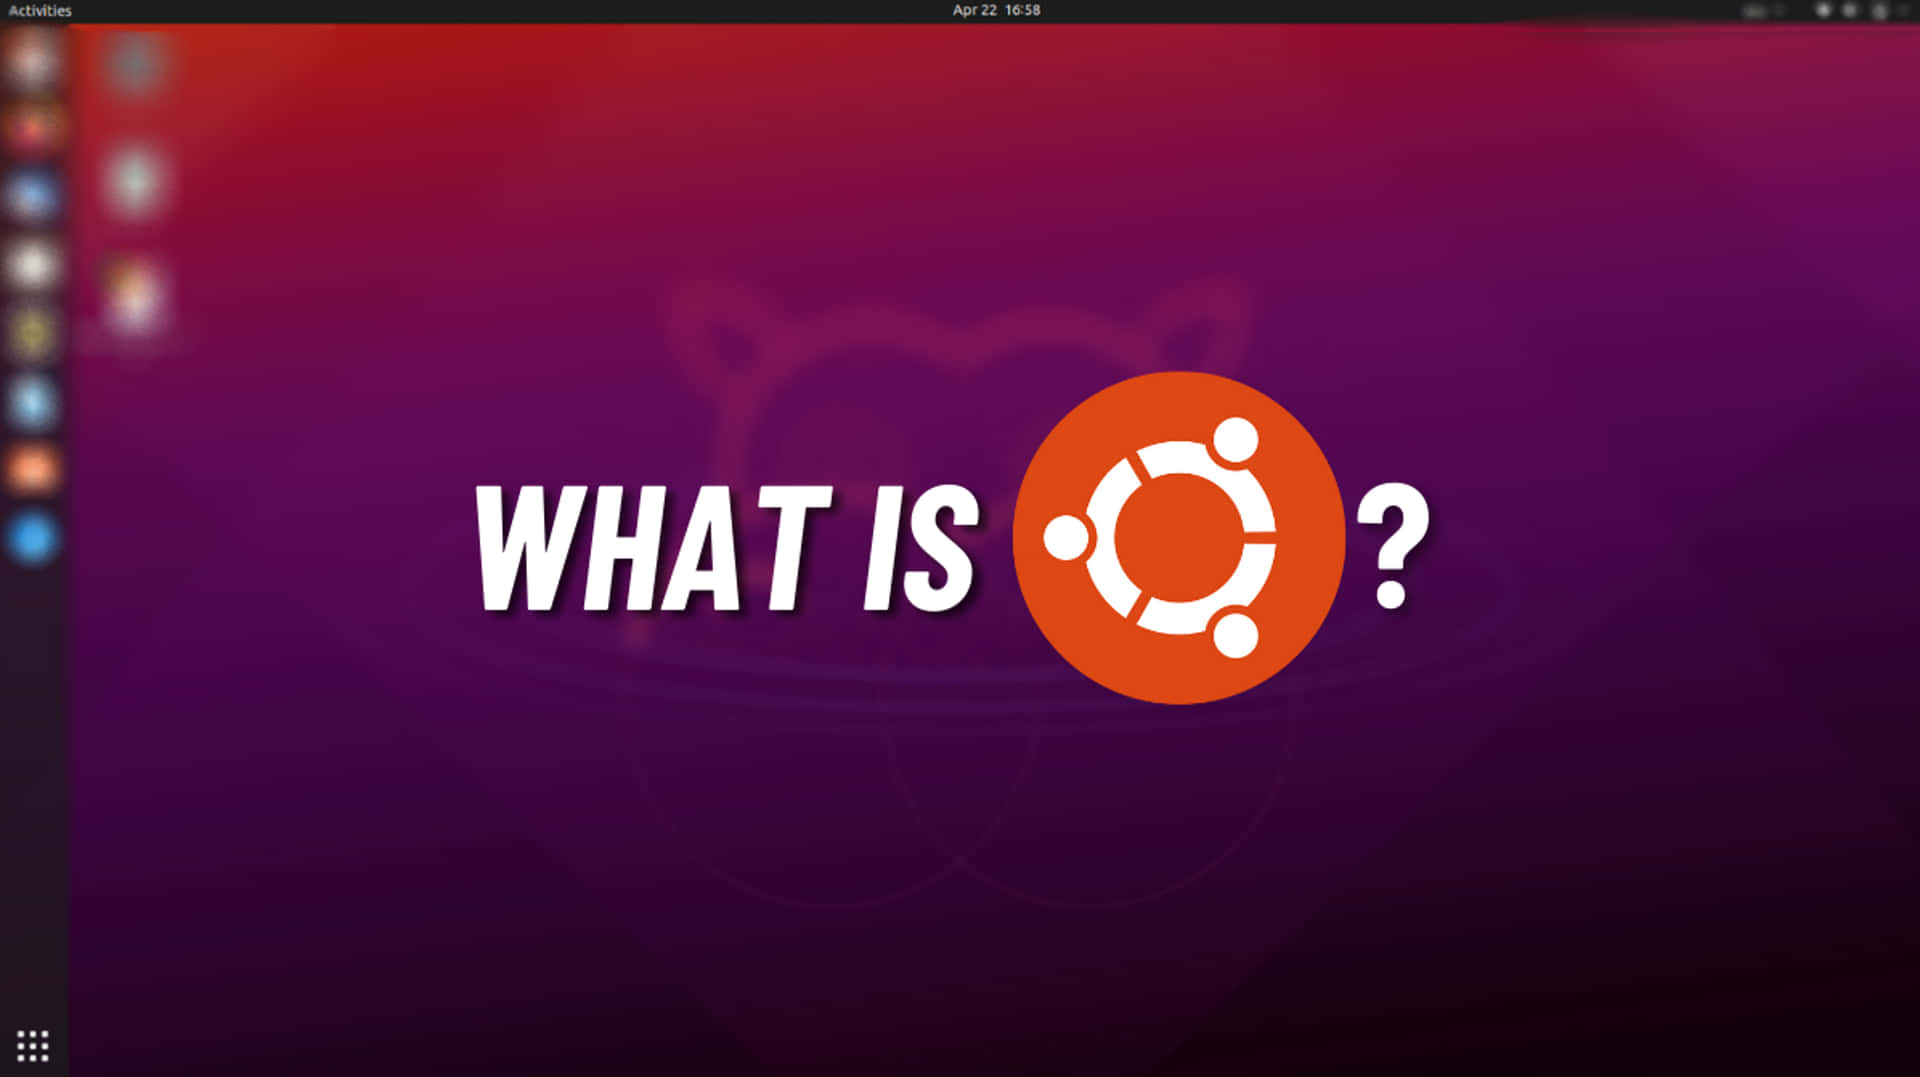 Velkommen til Ubuntu, din operativsystem